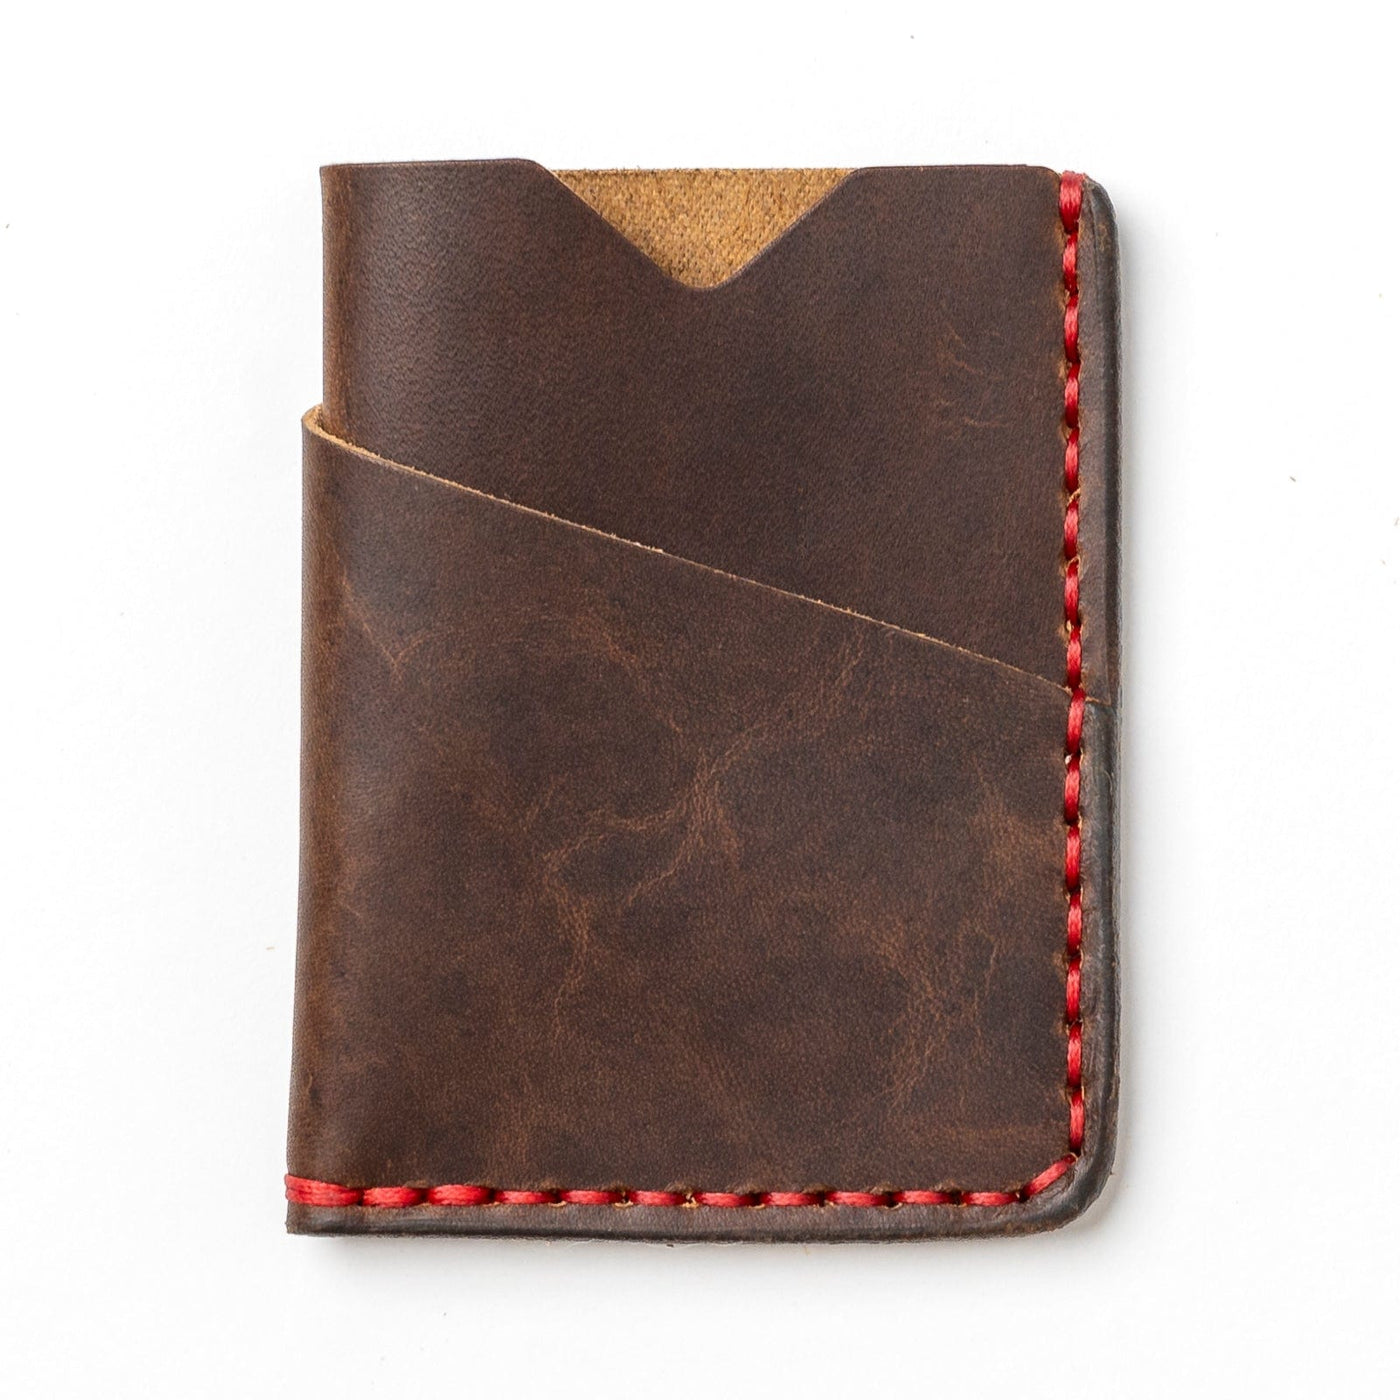 Leather Card Holder - Heritage Brown Popov Leather